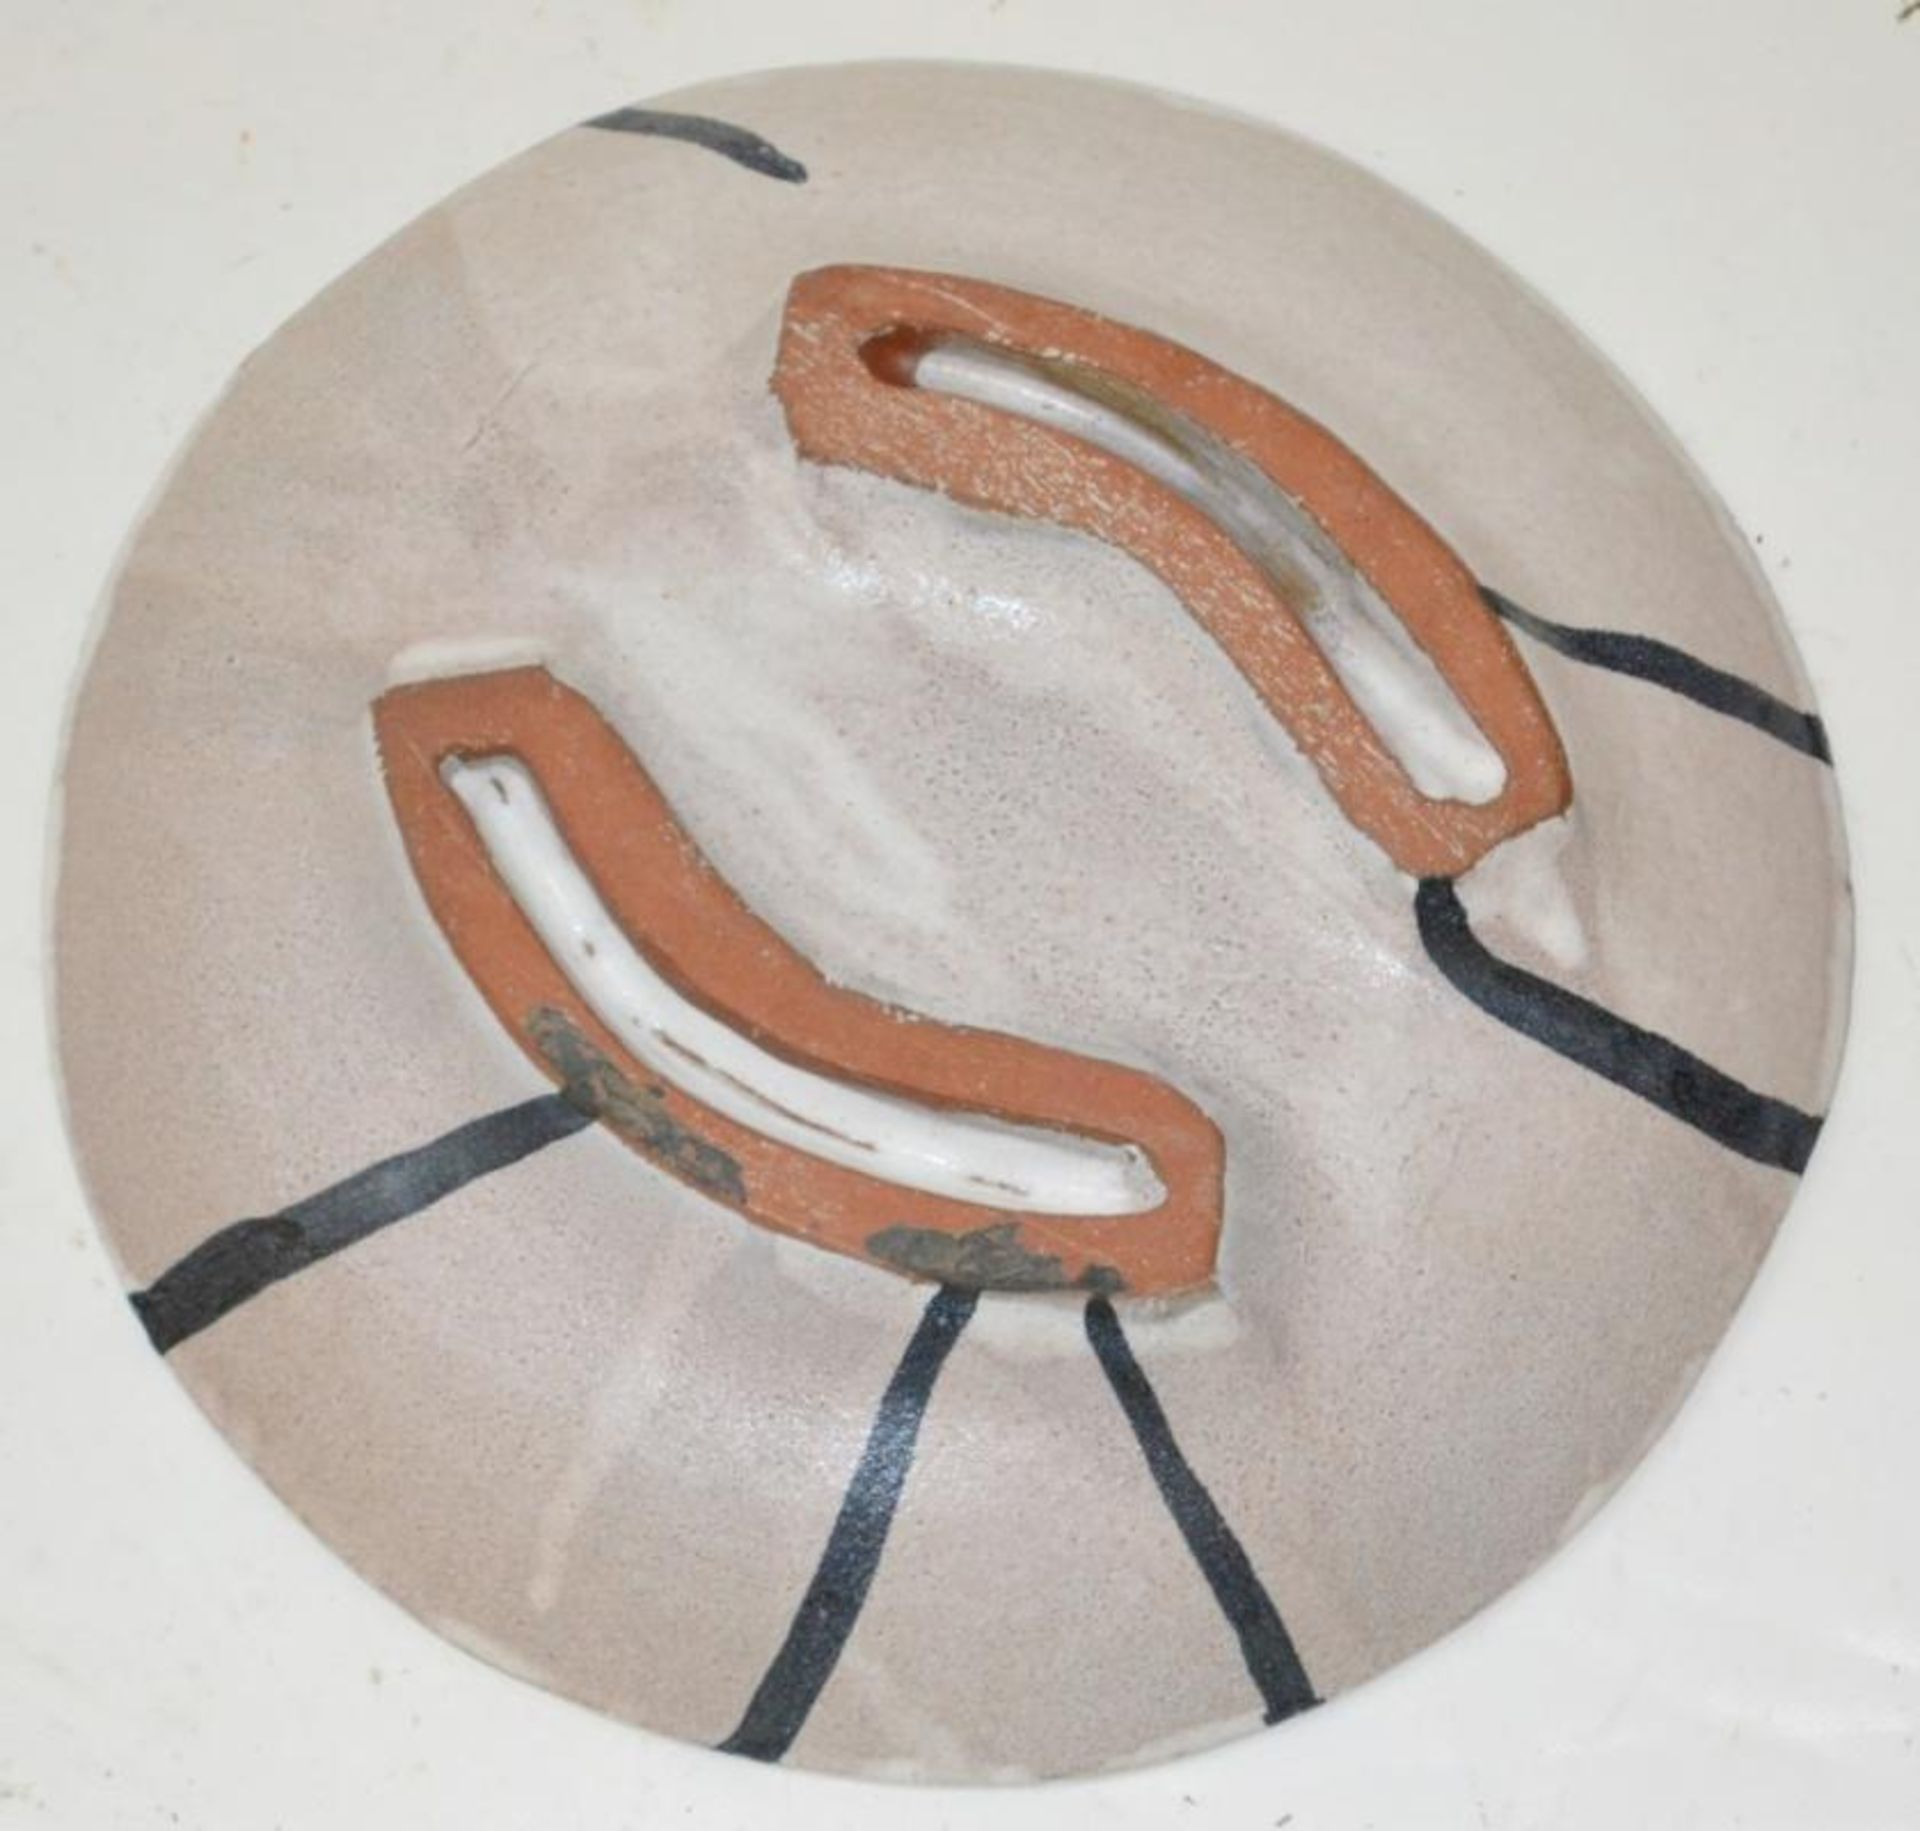 1 x KELLY WEARSTLER Grafitto Platter - Unique Handcrafted Piece - 34cm In Diameter - Ref: 5601556-B - Image 4 of 4